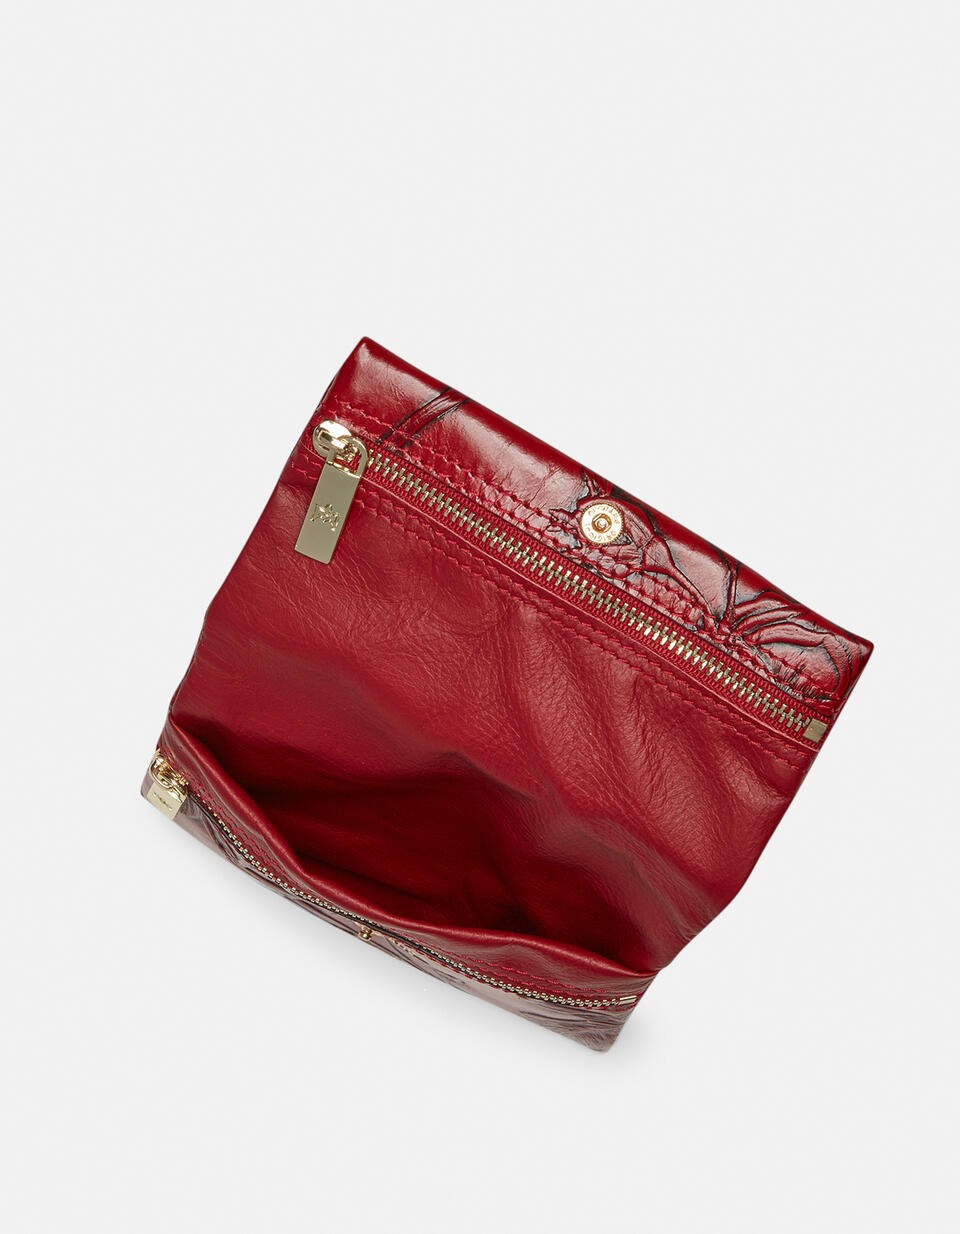 Big purse - Women's Wallets - Women's Wallets | Wallets ROSSO - Women's Wallets - Women's Wallets | WalletsCuoieria Fiorentina